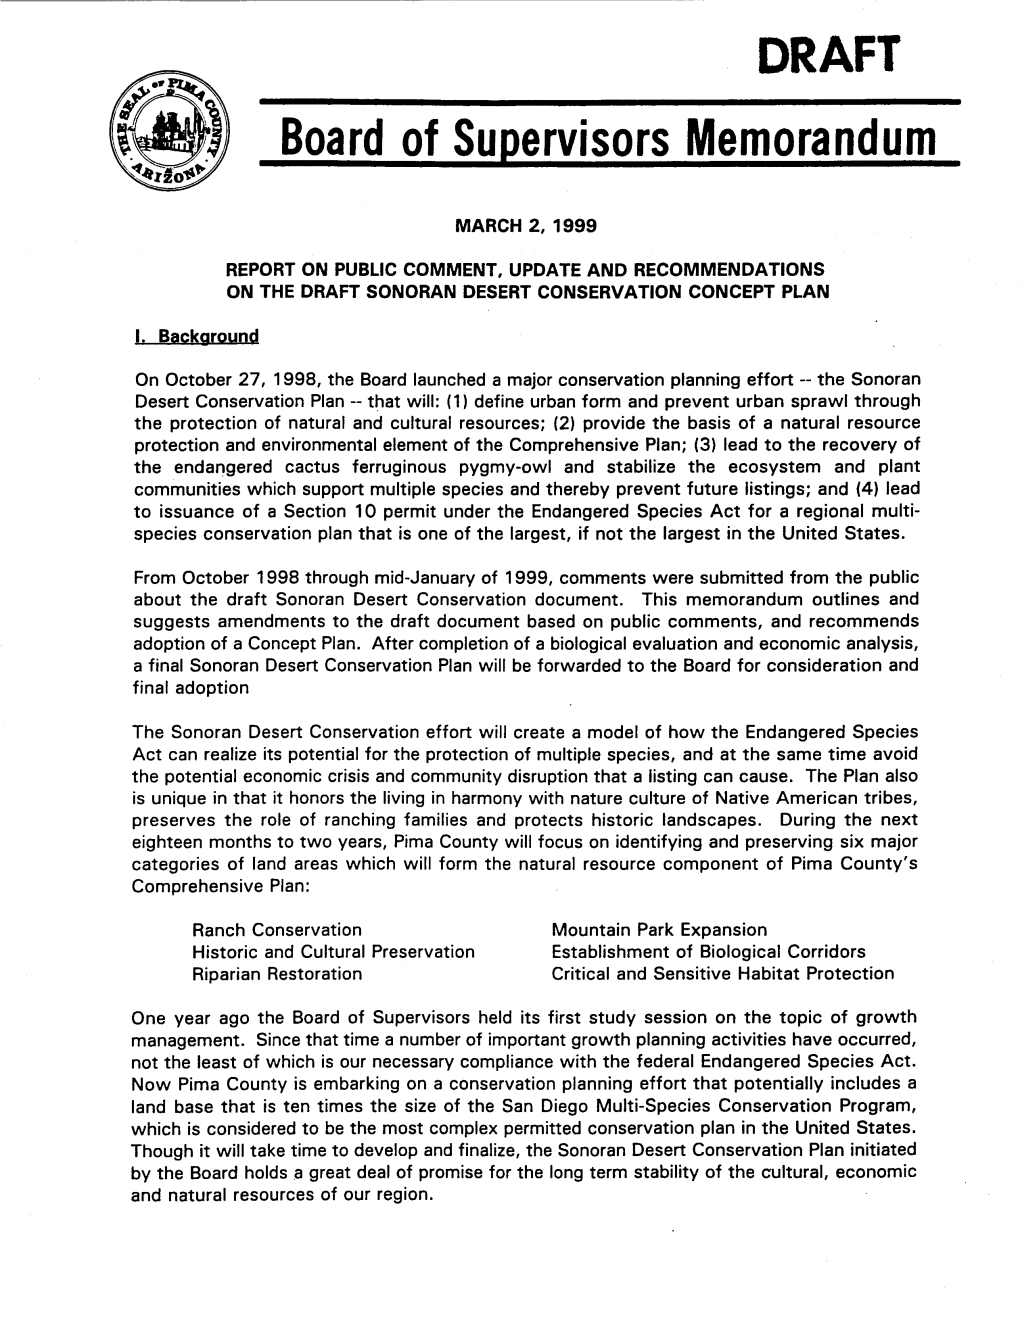 DRAFT Board of Supervisors Memorandum